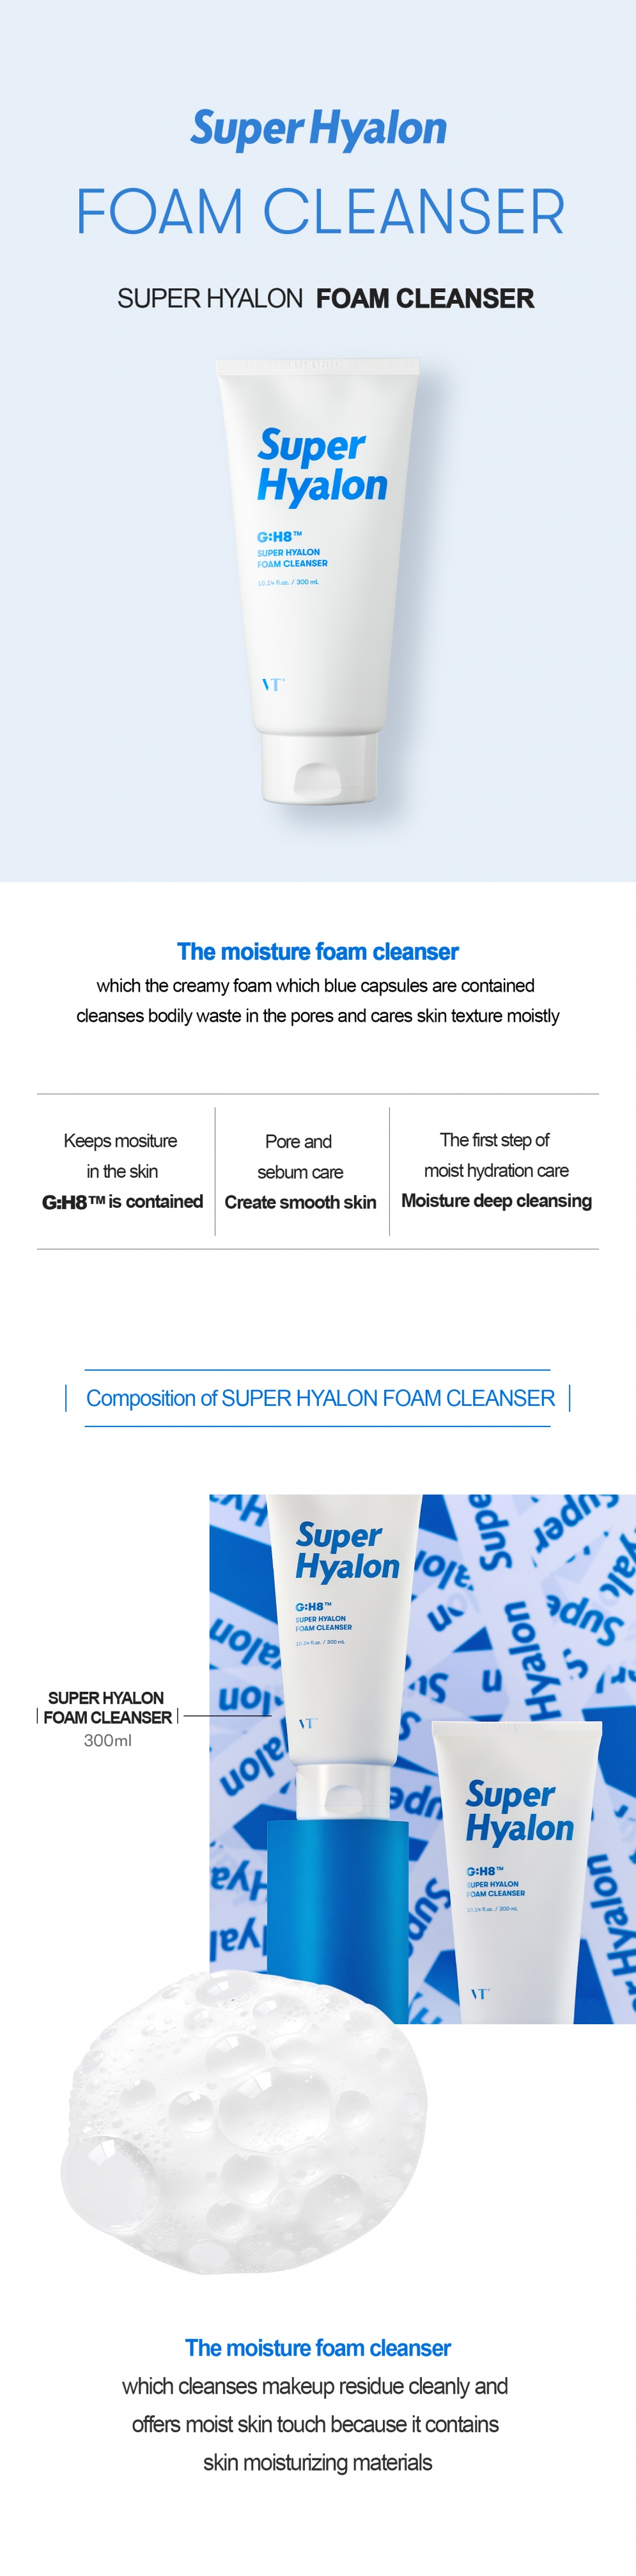 VT Cosmetics Super Hyalon Foam Cleanser 300ml | StyleKorean.com